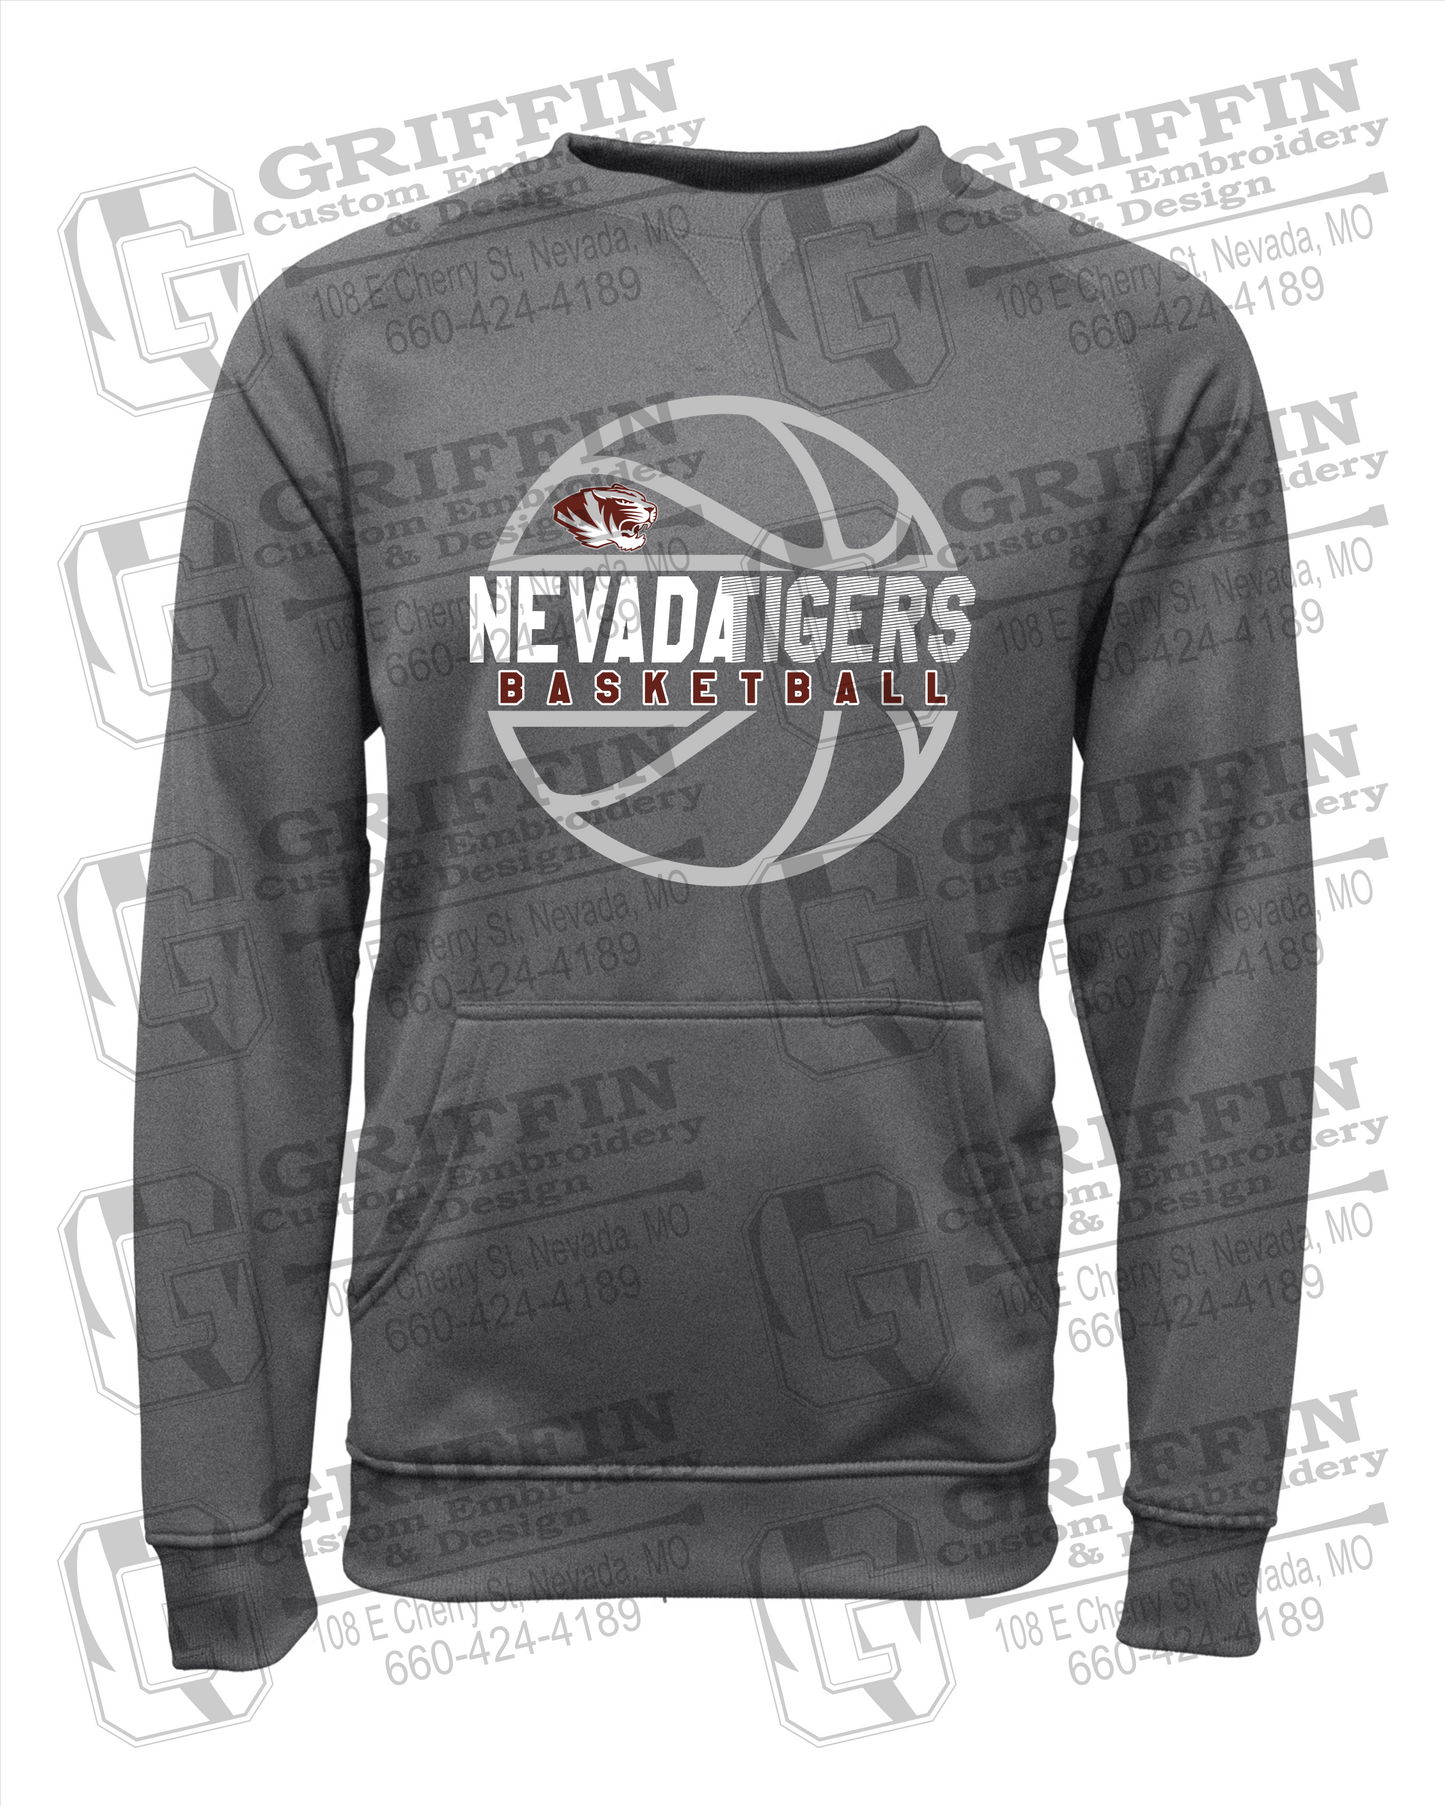 Nevada Tigers 19-V Youth Sweatshirt - Basketball